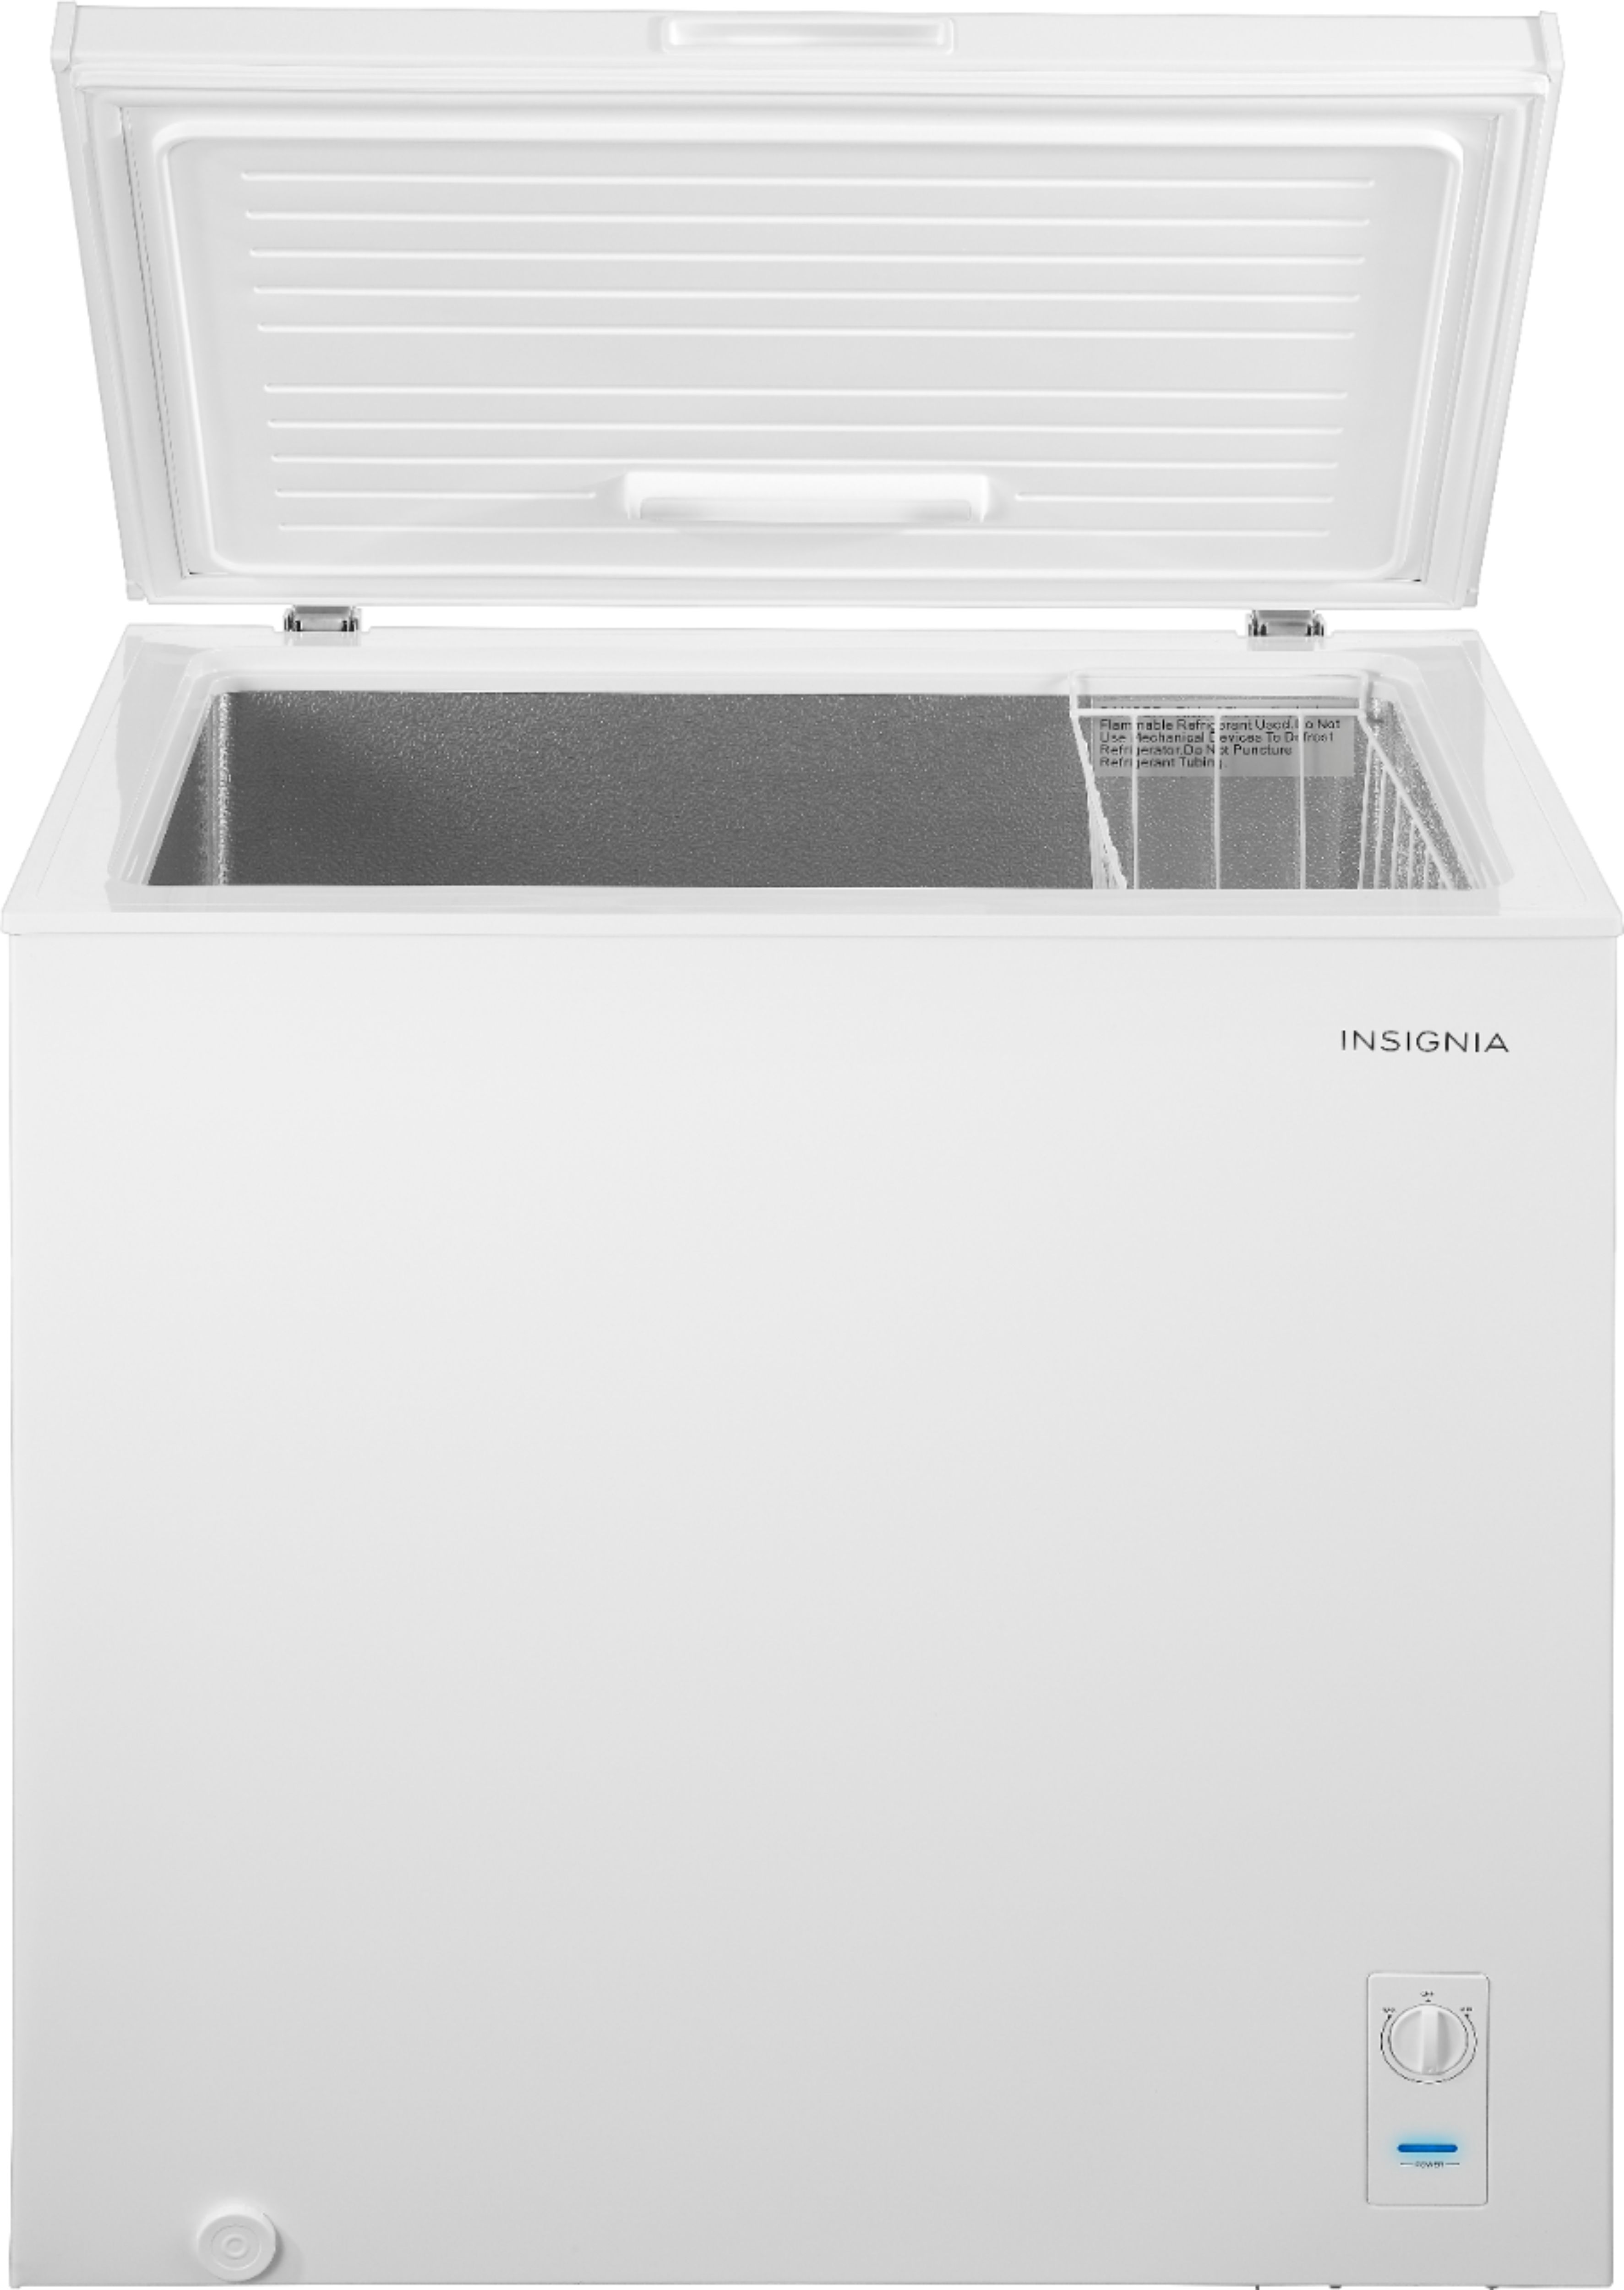 TABU Chest Freezer, 7.0 Cu Ft Deep Freezer with Adjustable Temperature,  Compact Freezer with Top Open Door (White)